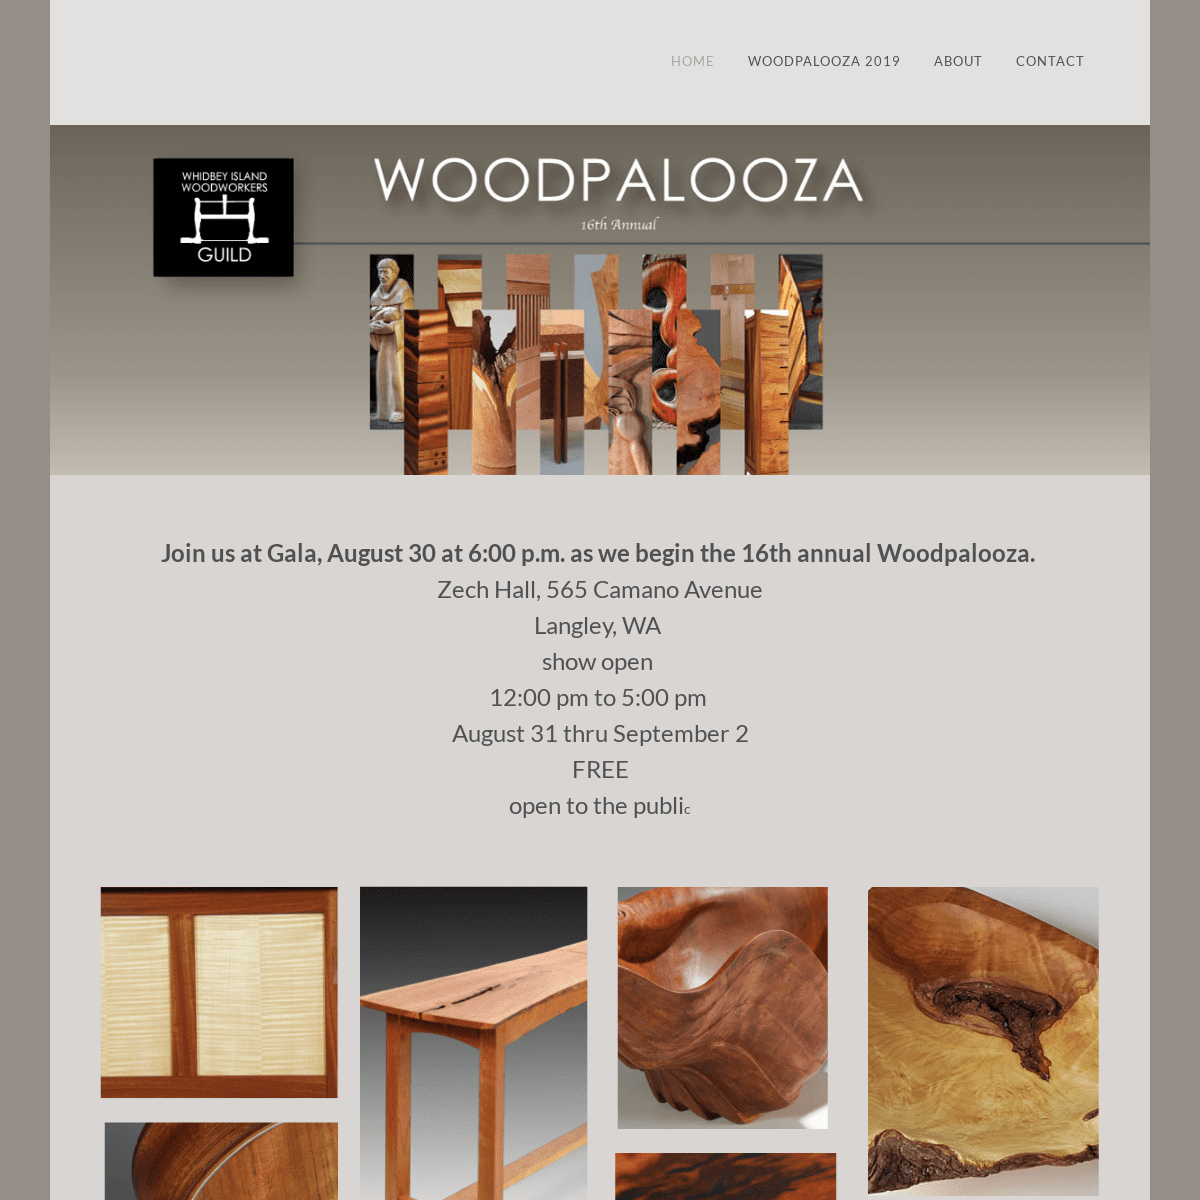 A complete backup of woodpalooza.com